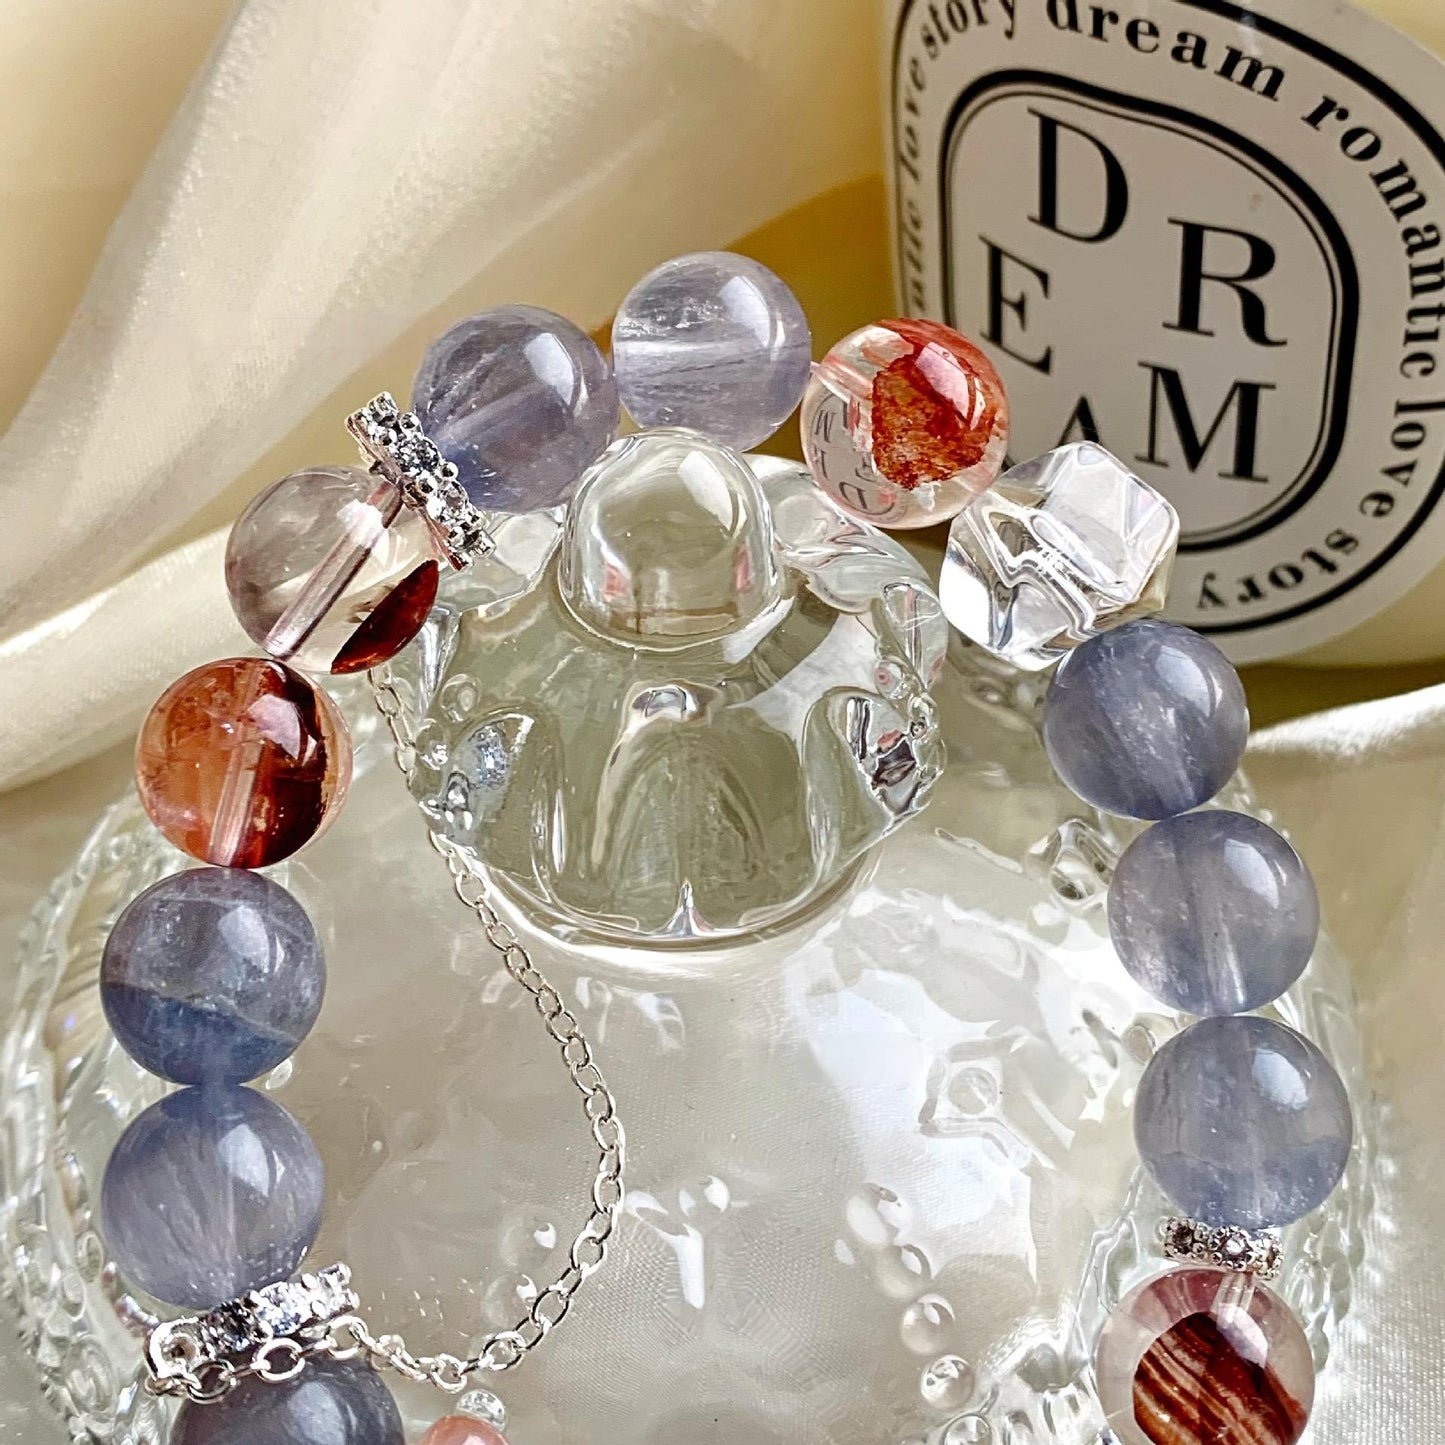 August.Eternal happiness.Advanced handmade custom natural crystal bracelet